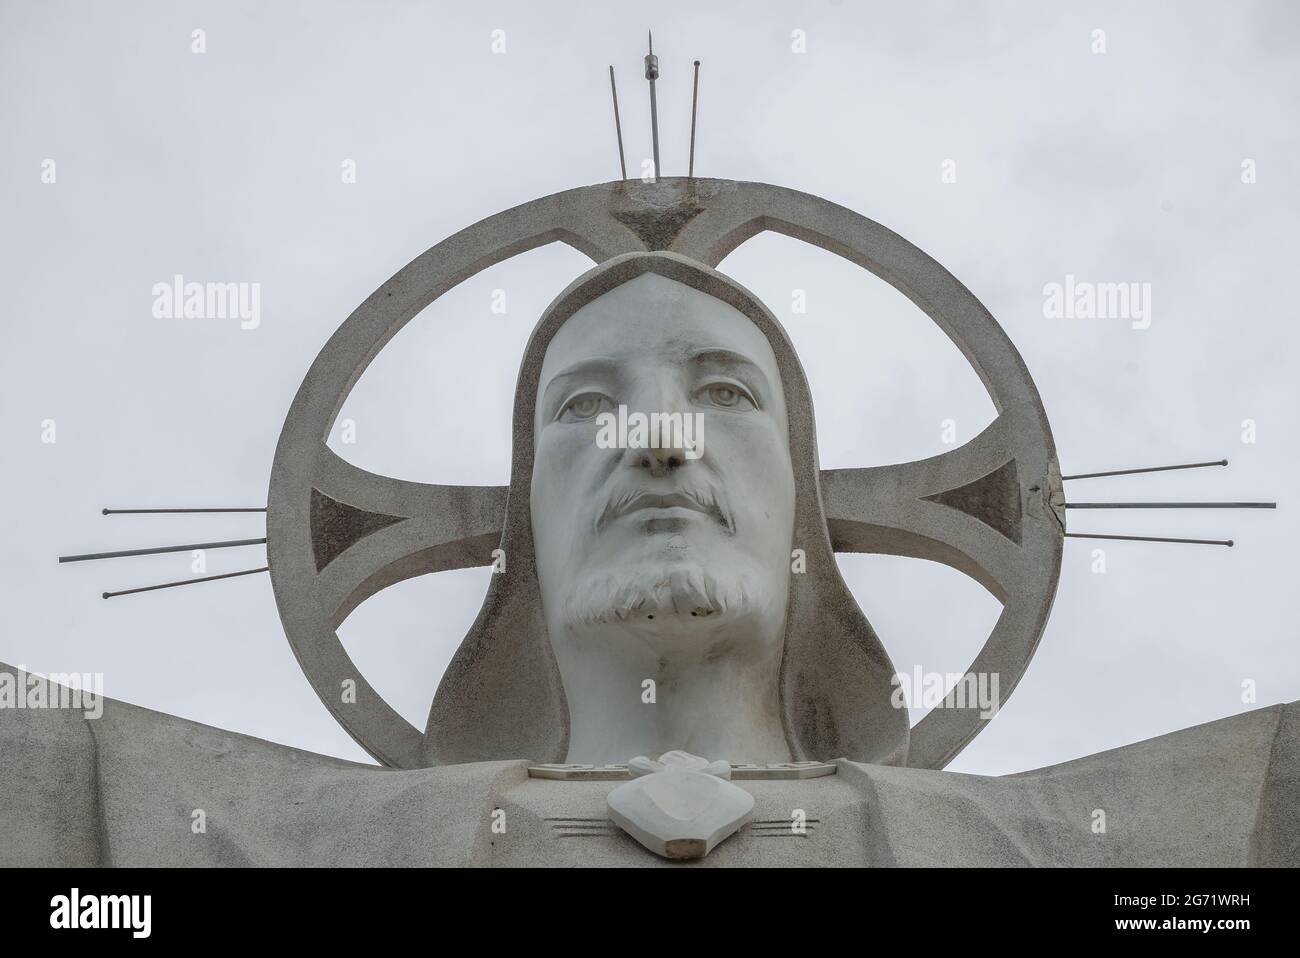 VUNG TAU, VIETNAM - DECEMBER 22, 2015: Head of 30-meter sculpture of Jesus Christ on Mount Nyo close-up Stock Photo